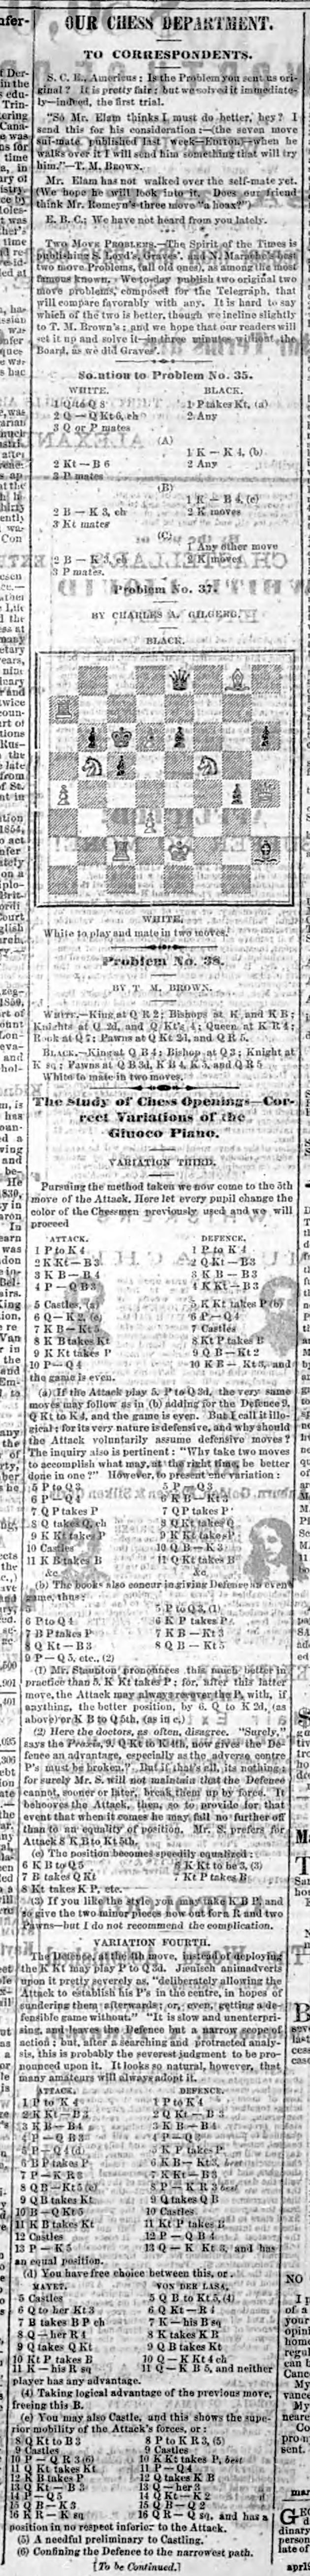 1867.05.17-01 Macon Georgia Weekly Telegraph.jpg